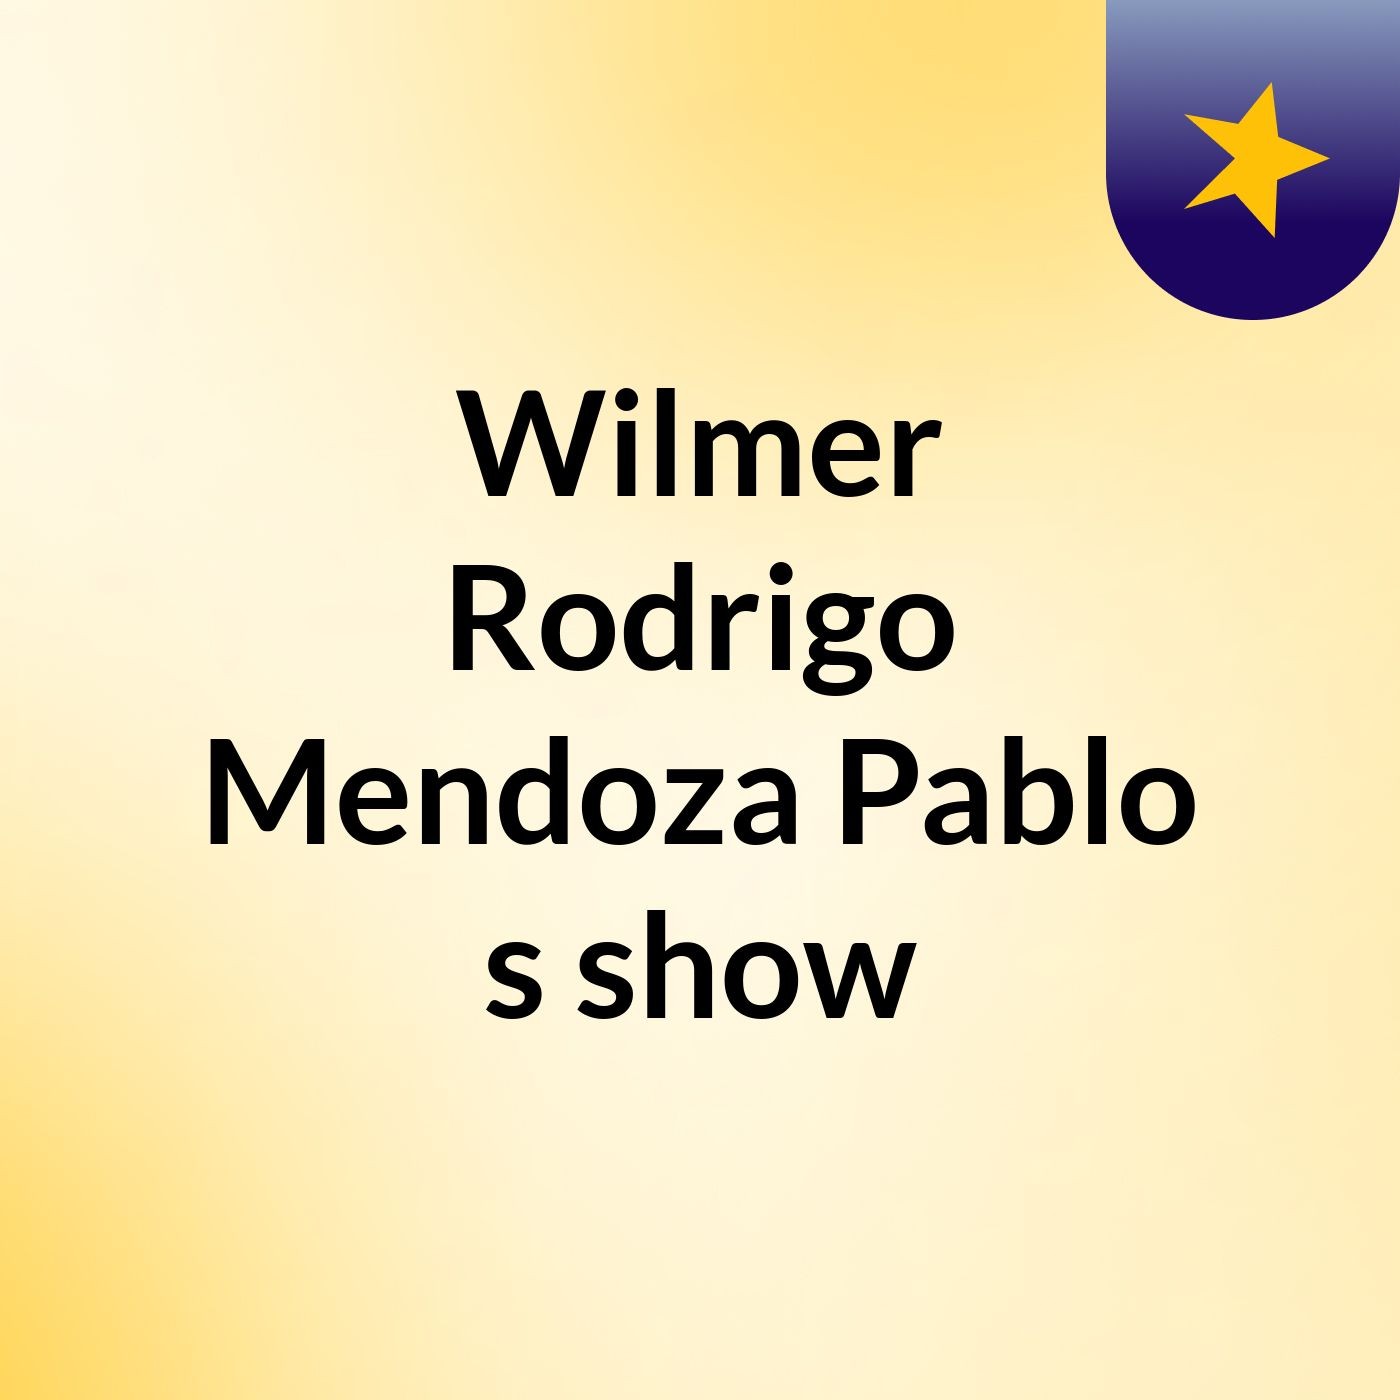 Wilmer Rodrigo Mendoza Pablo's show